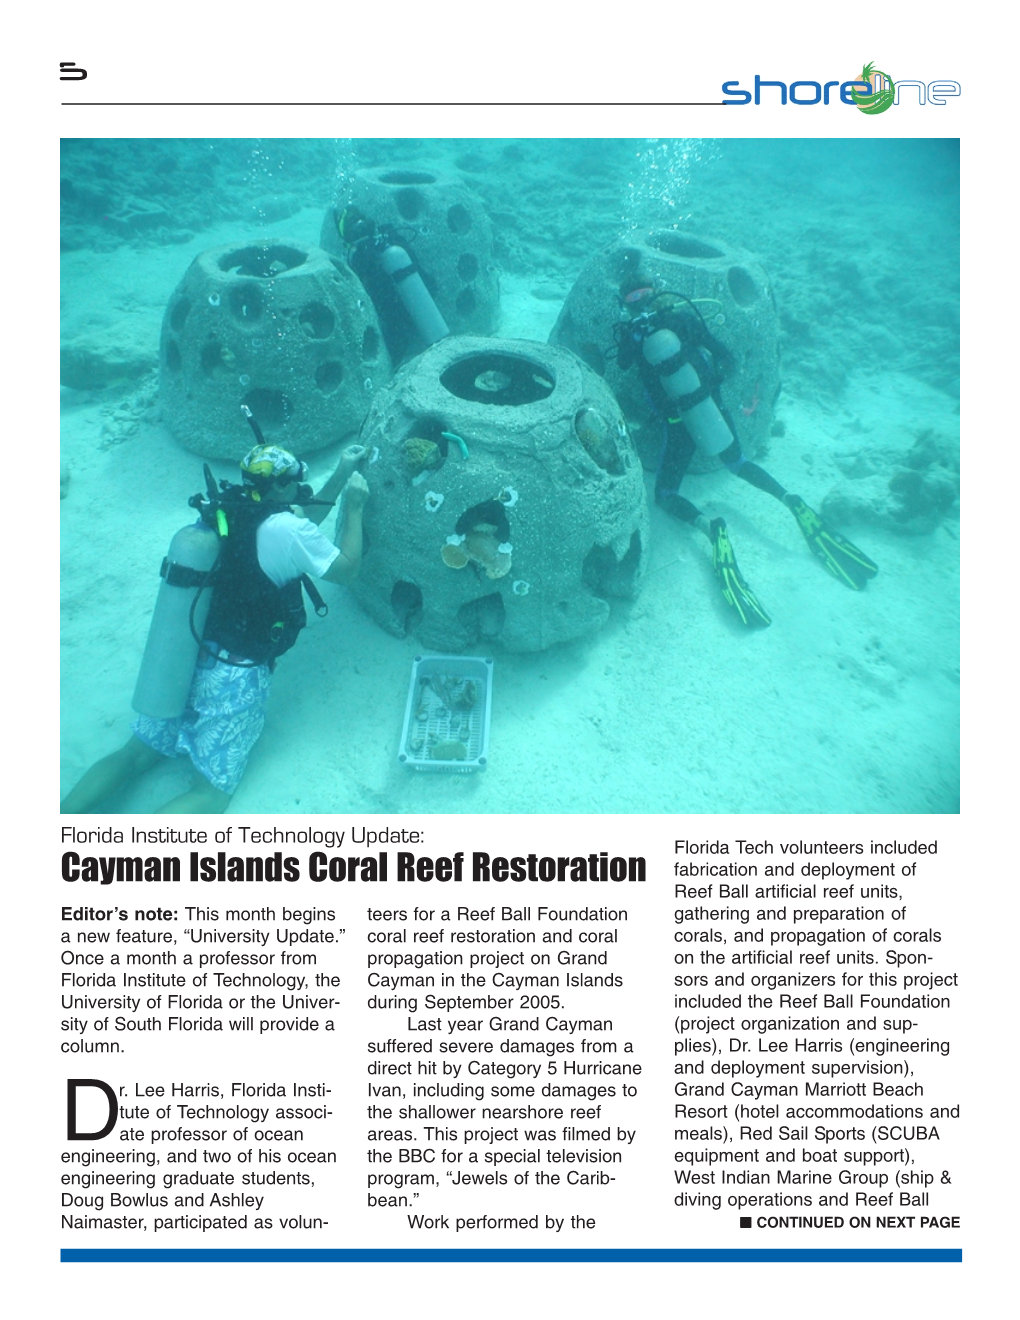 Cayman Islands Coral Reef Restoration